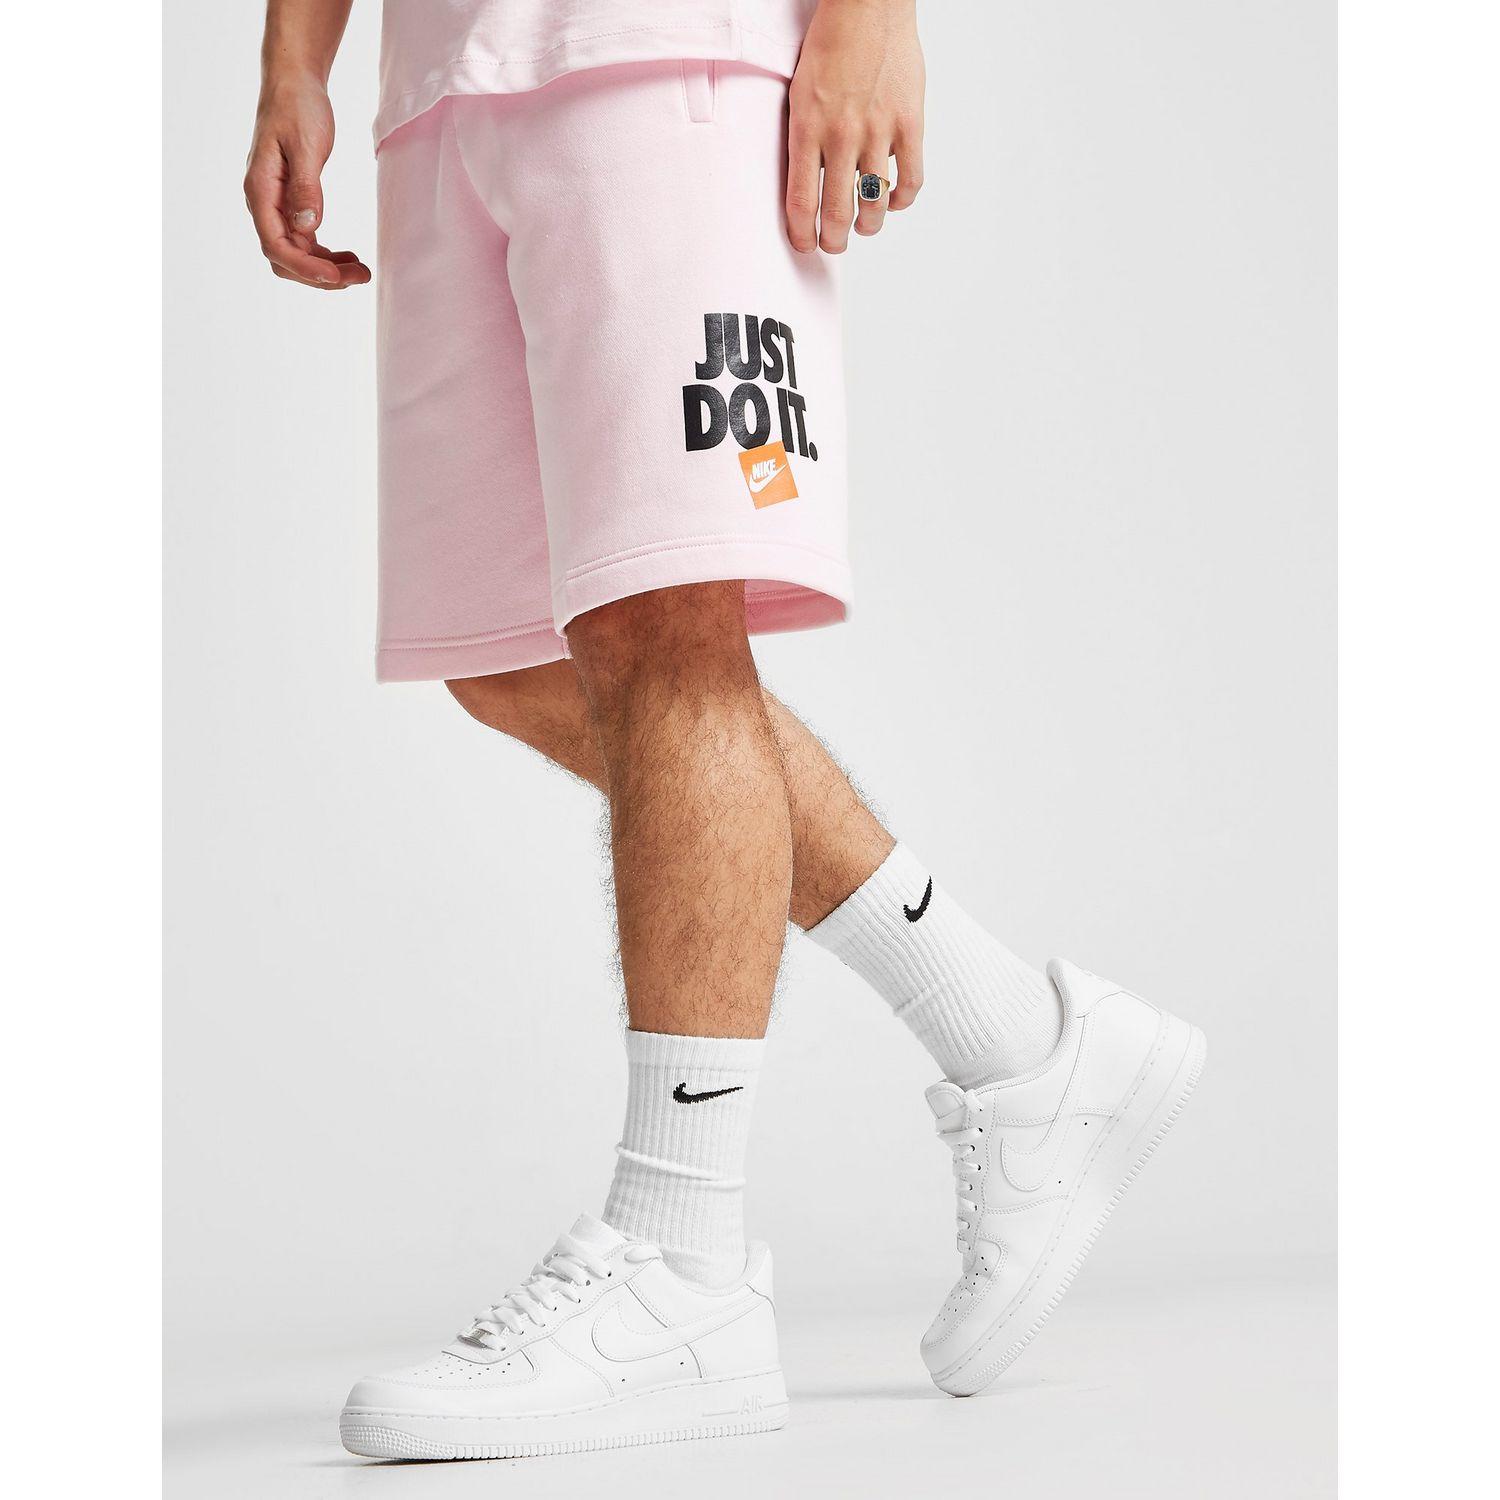 pink fleece nike shorts